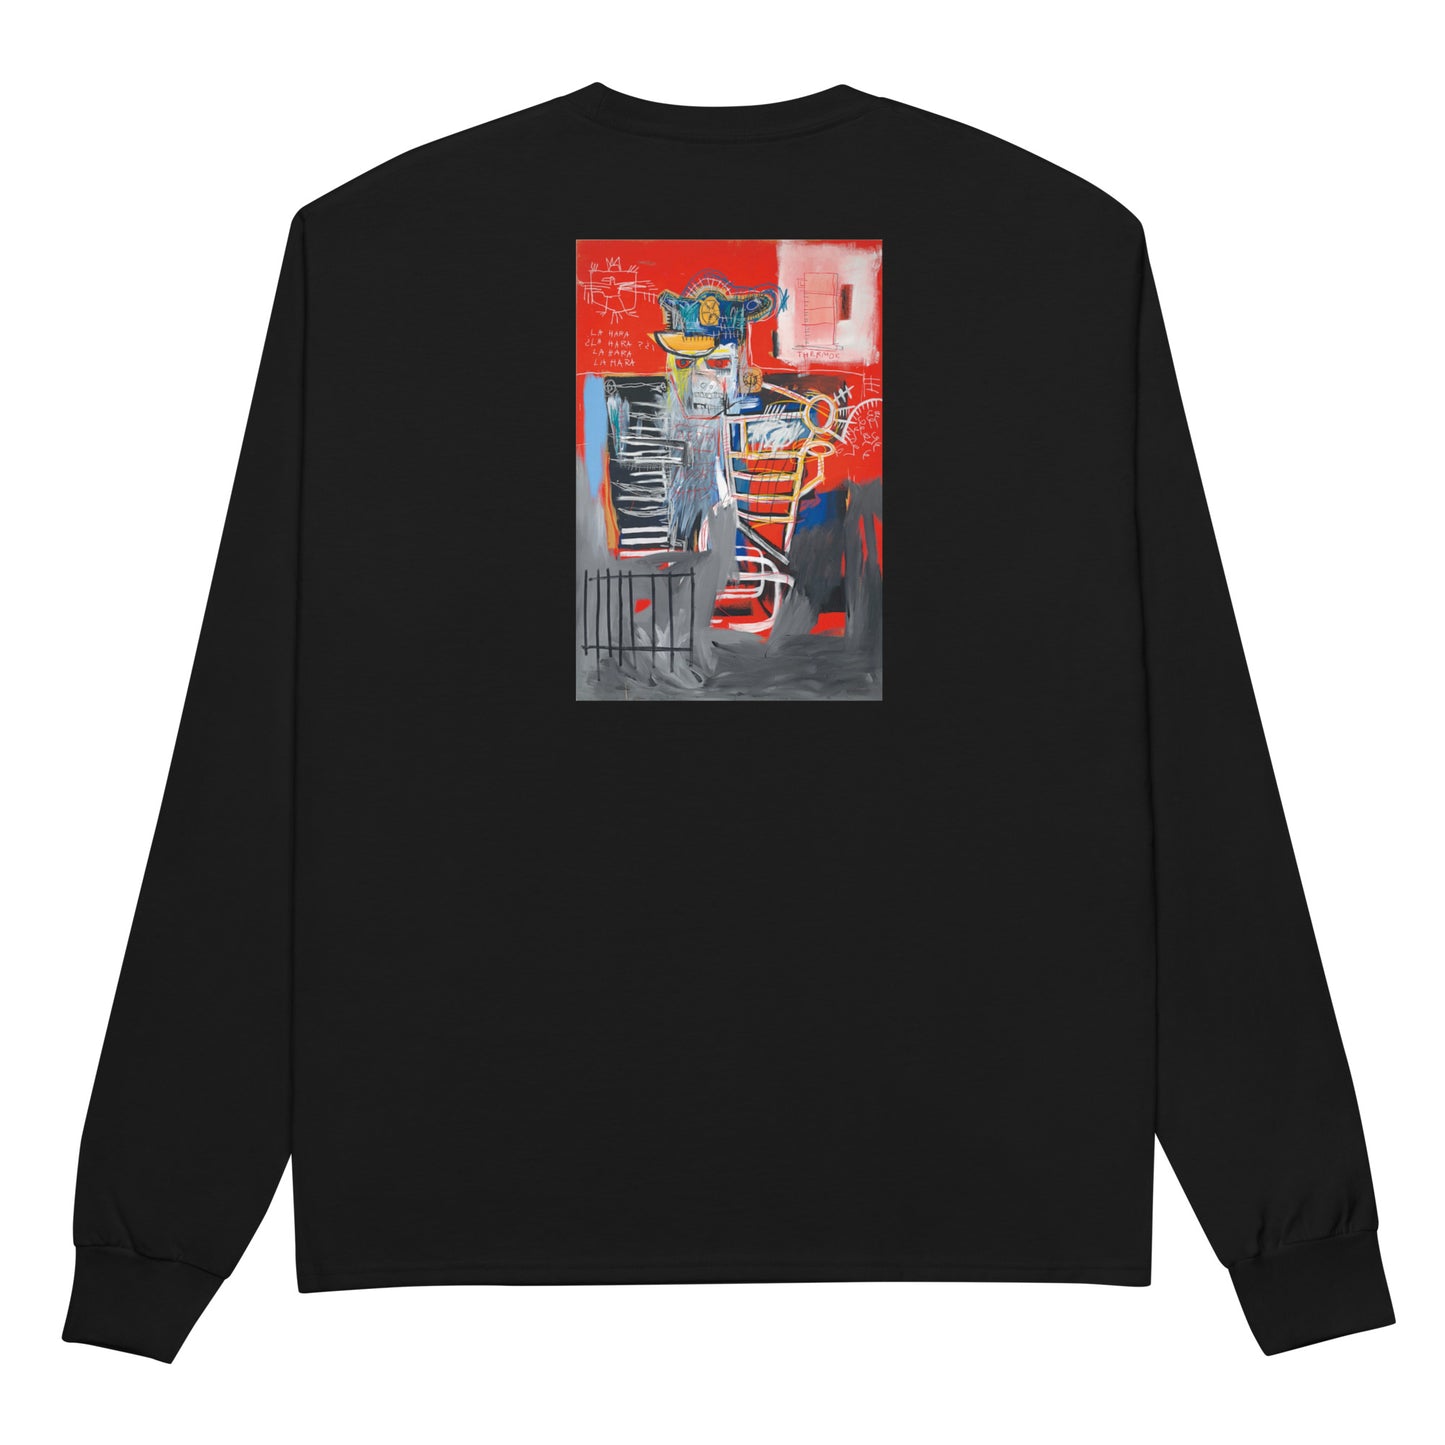 Jean-Michel Basquiat "La Hara" Artwork Embroidered + Printed Premium Champion Streetwear Long Sleeve Shirt Black